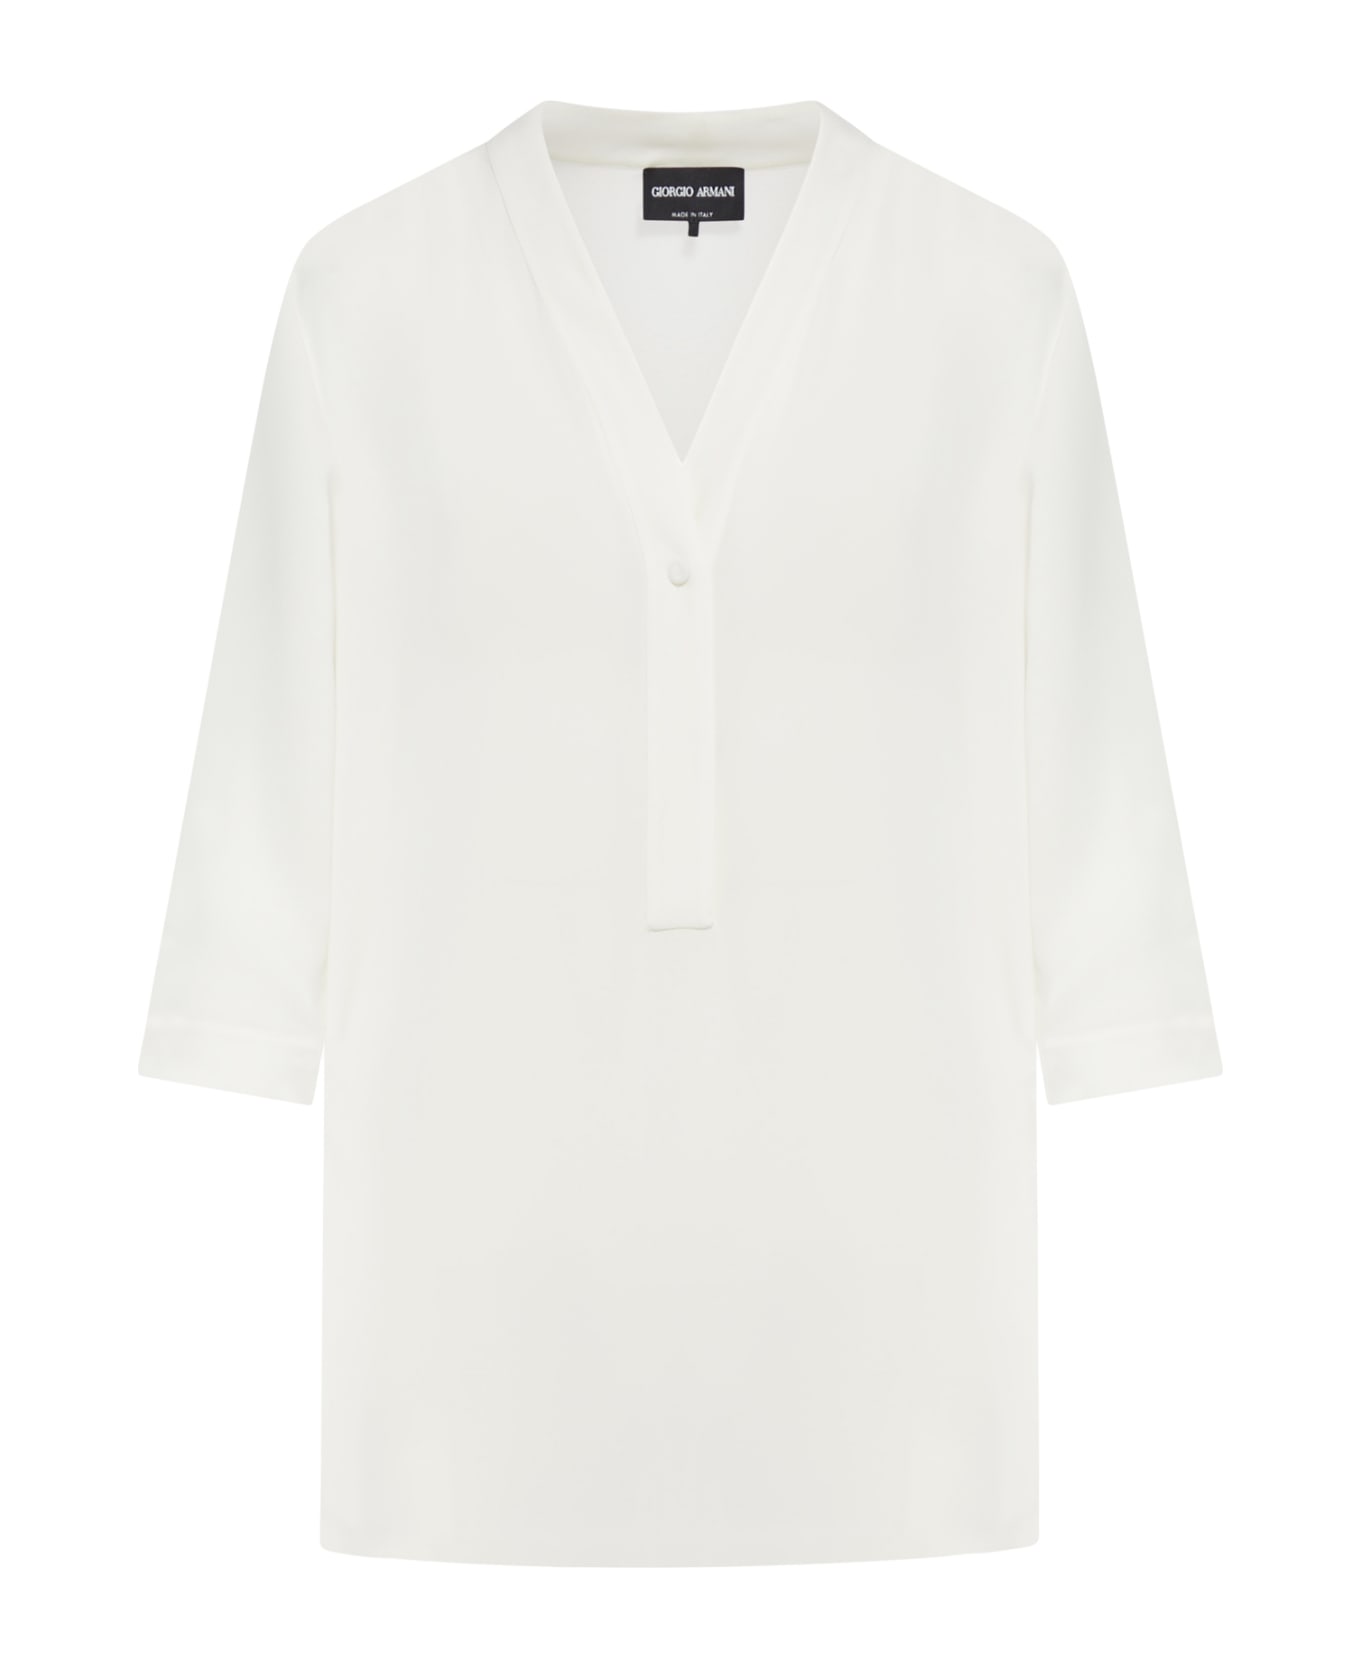 Giorgio Armani Shirt - Bn Brilliant White